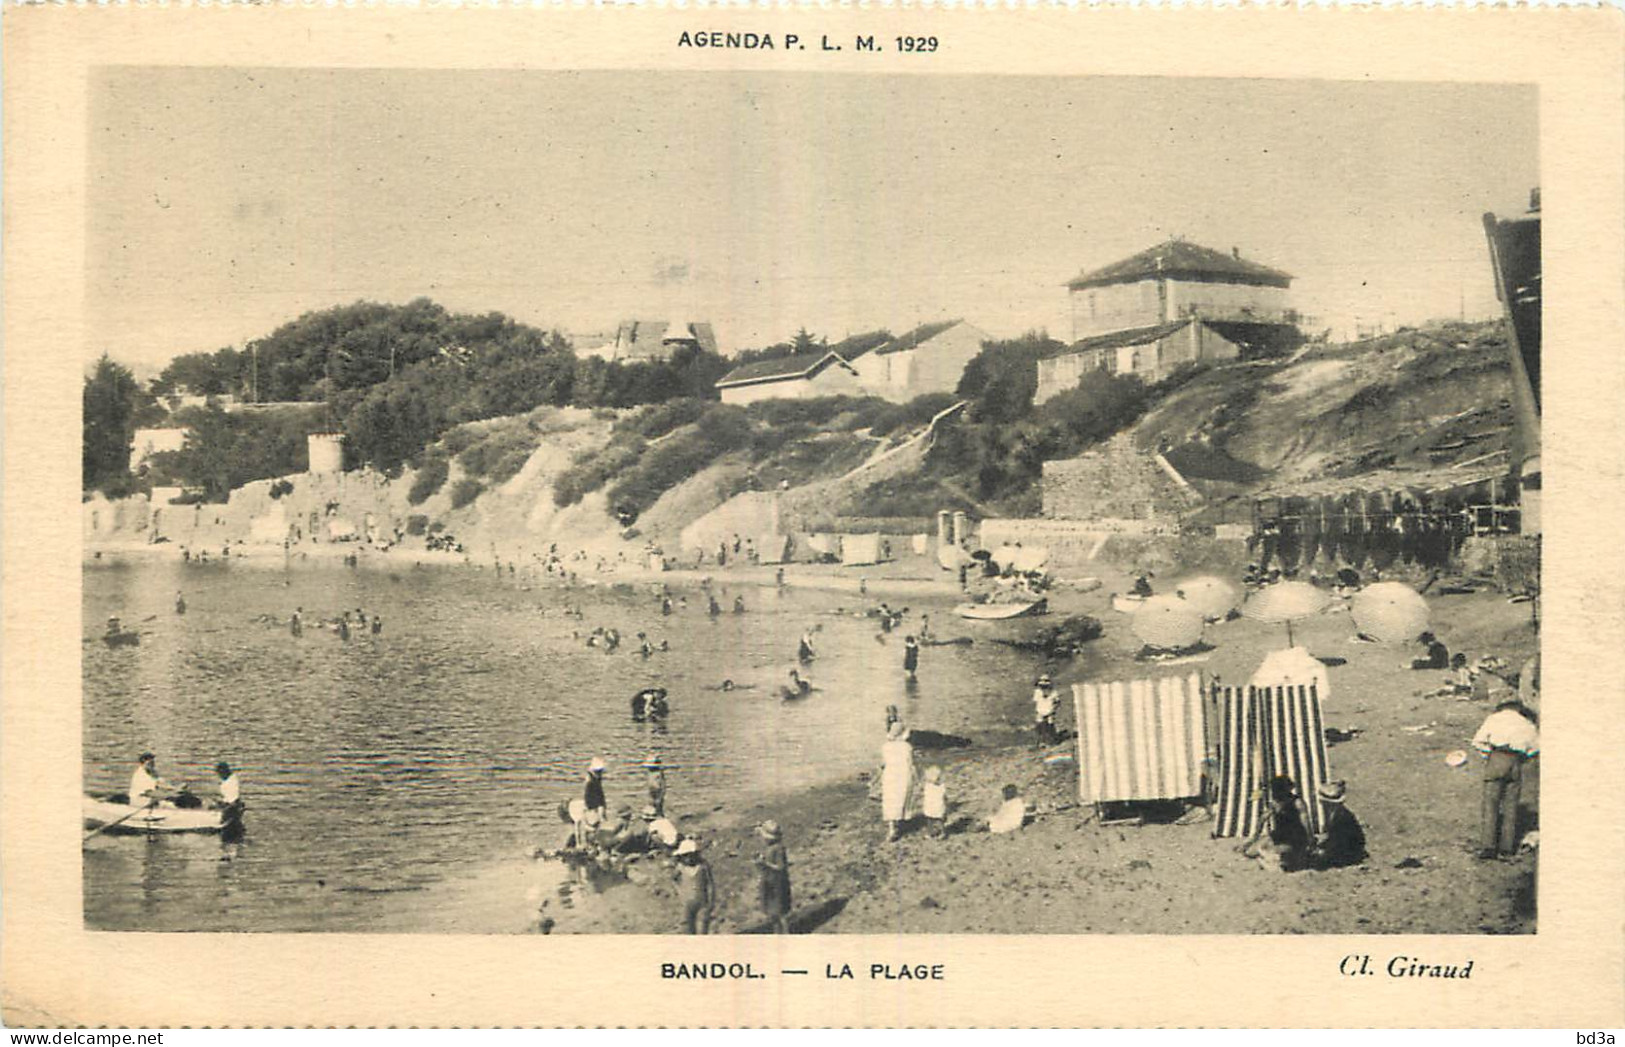 83 - BANDOL -  LA PLAGE - AGENDA P.L.M. 1929 - Bandol